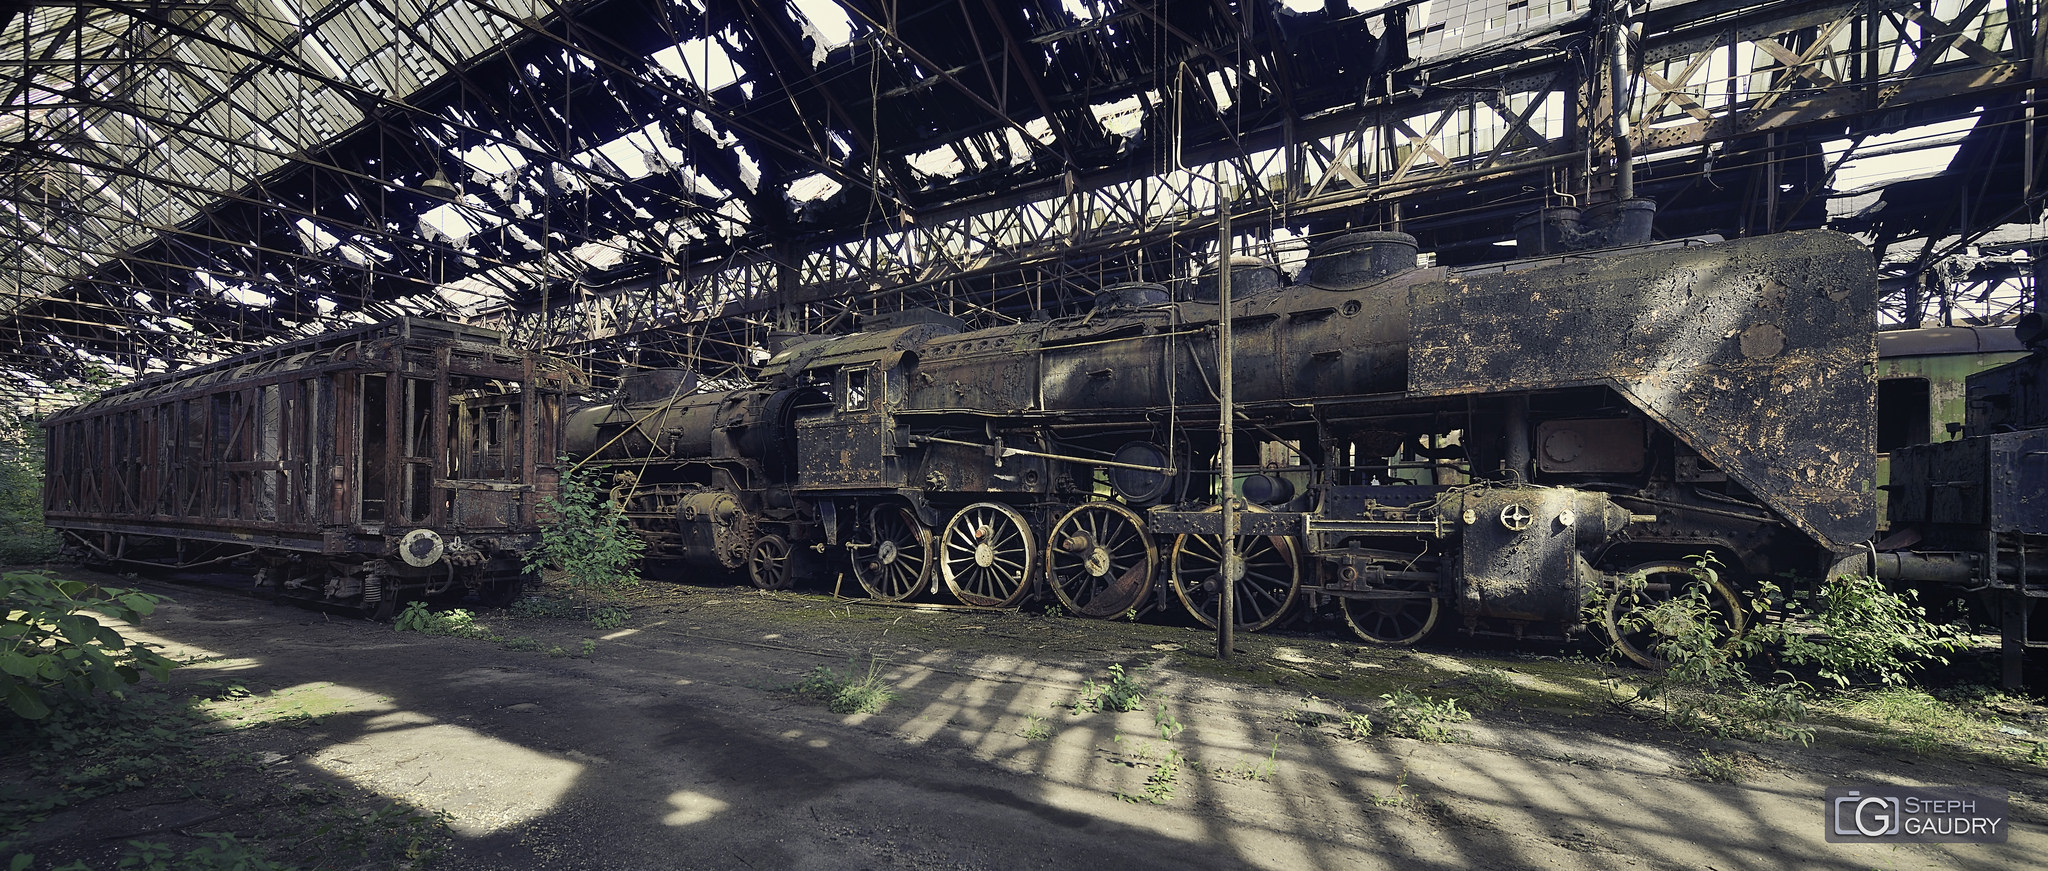 Abandoned steam train